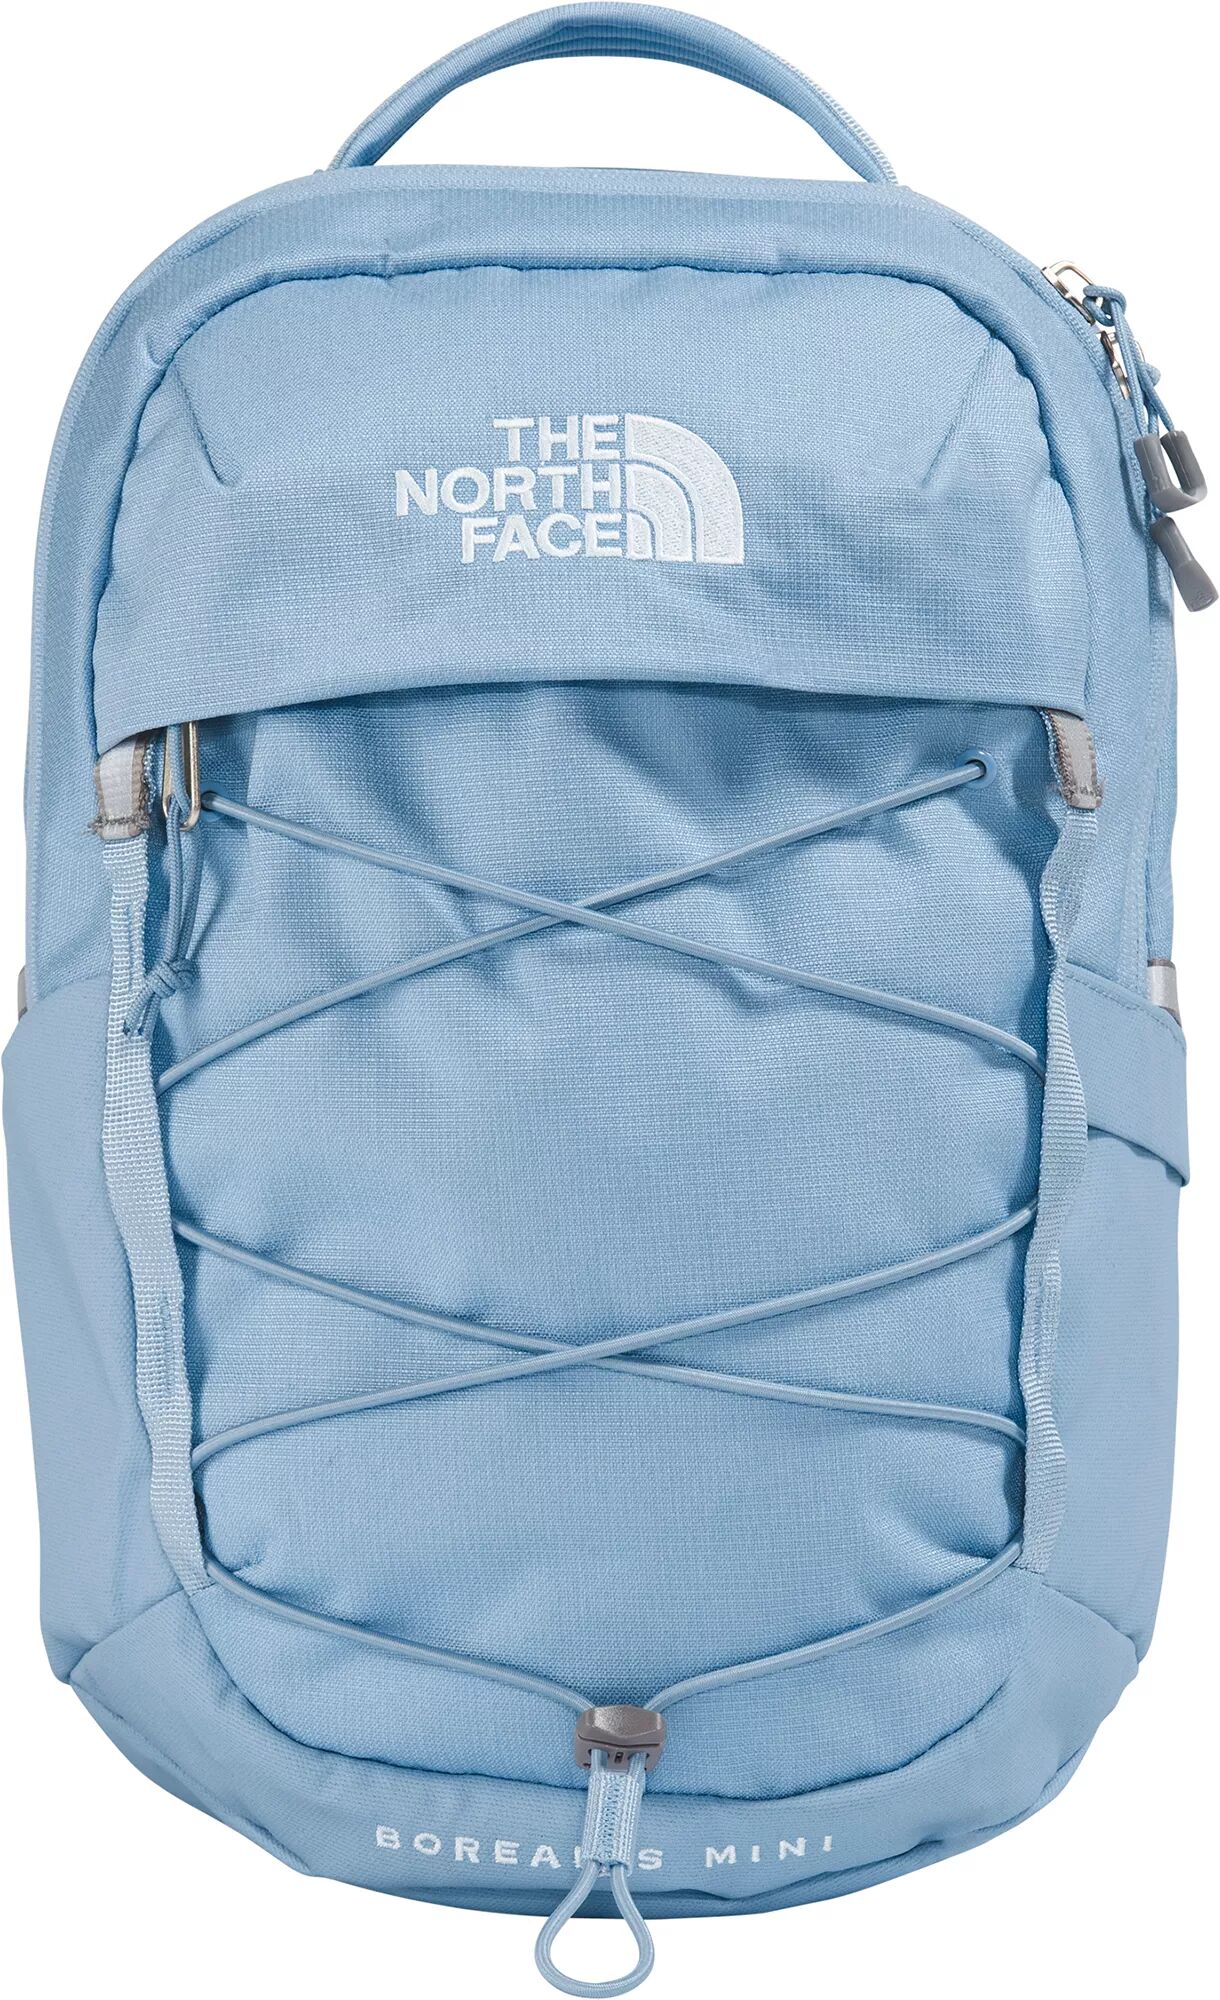 The North Face Borealis Mini Backpack, Men's, Blue